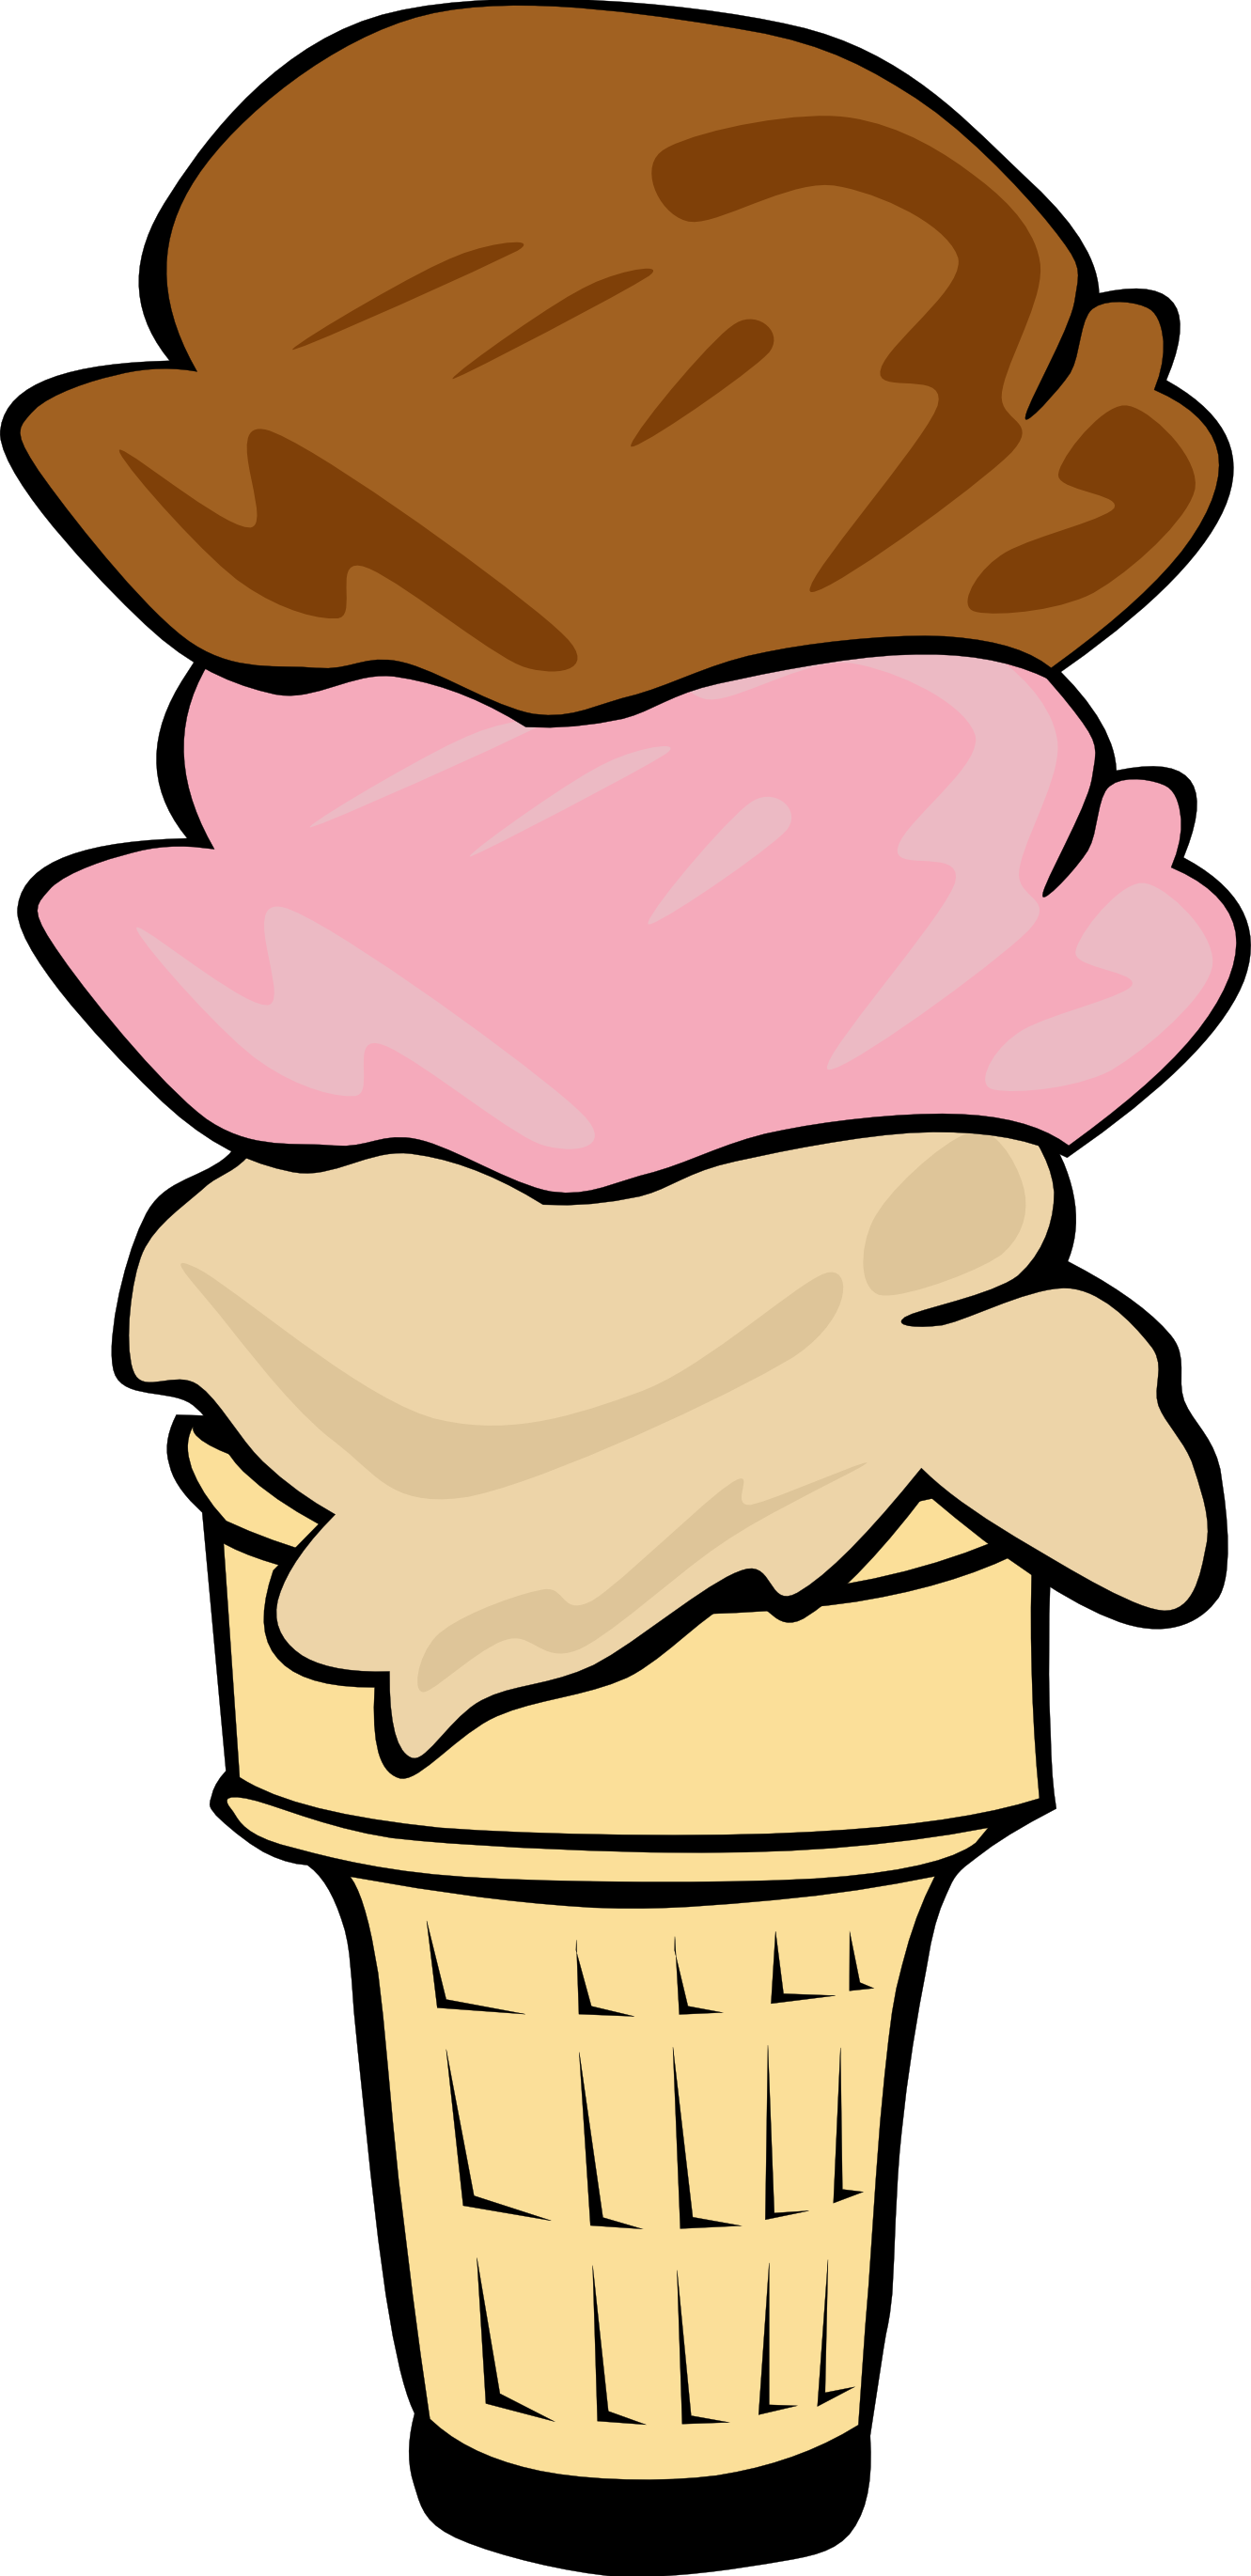 Free Ice Cream Cone Clipart Download Free Ice Cream Cone Clipart png